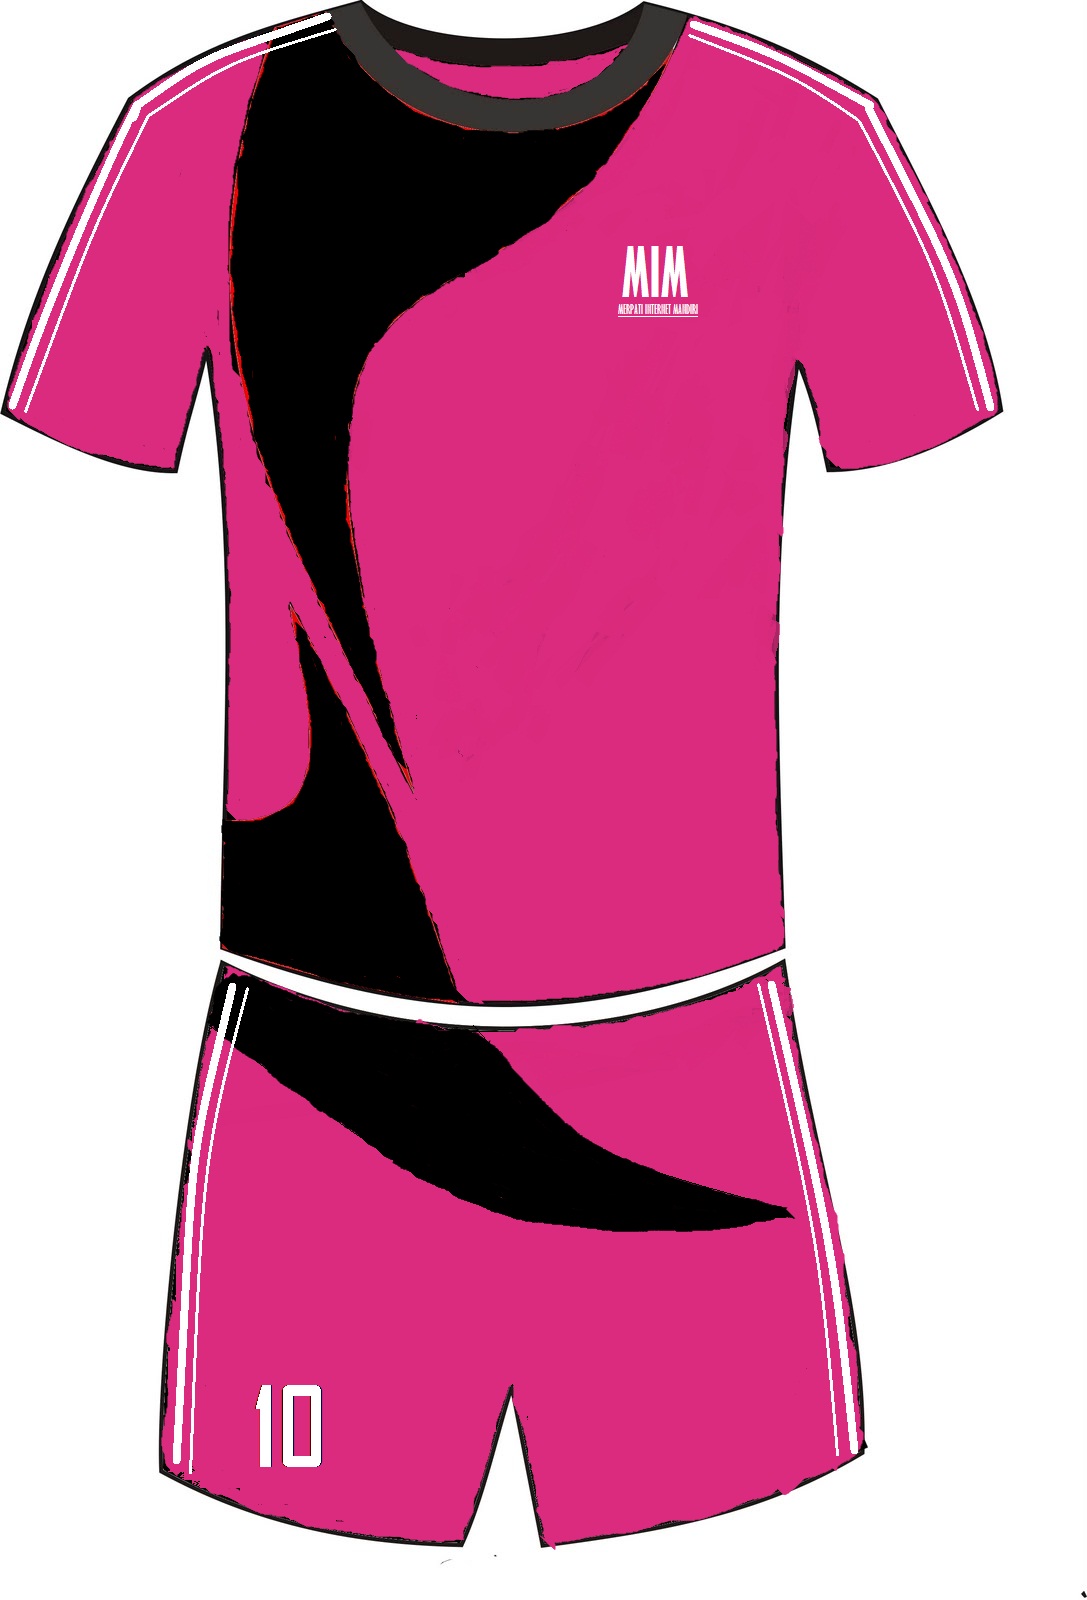 Gambar Desain Baju Bola Futsal Modern Keren Garuda Print Tempat